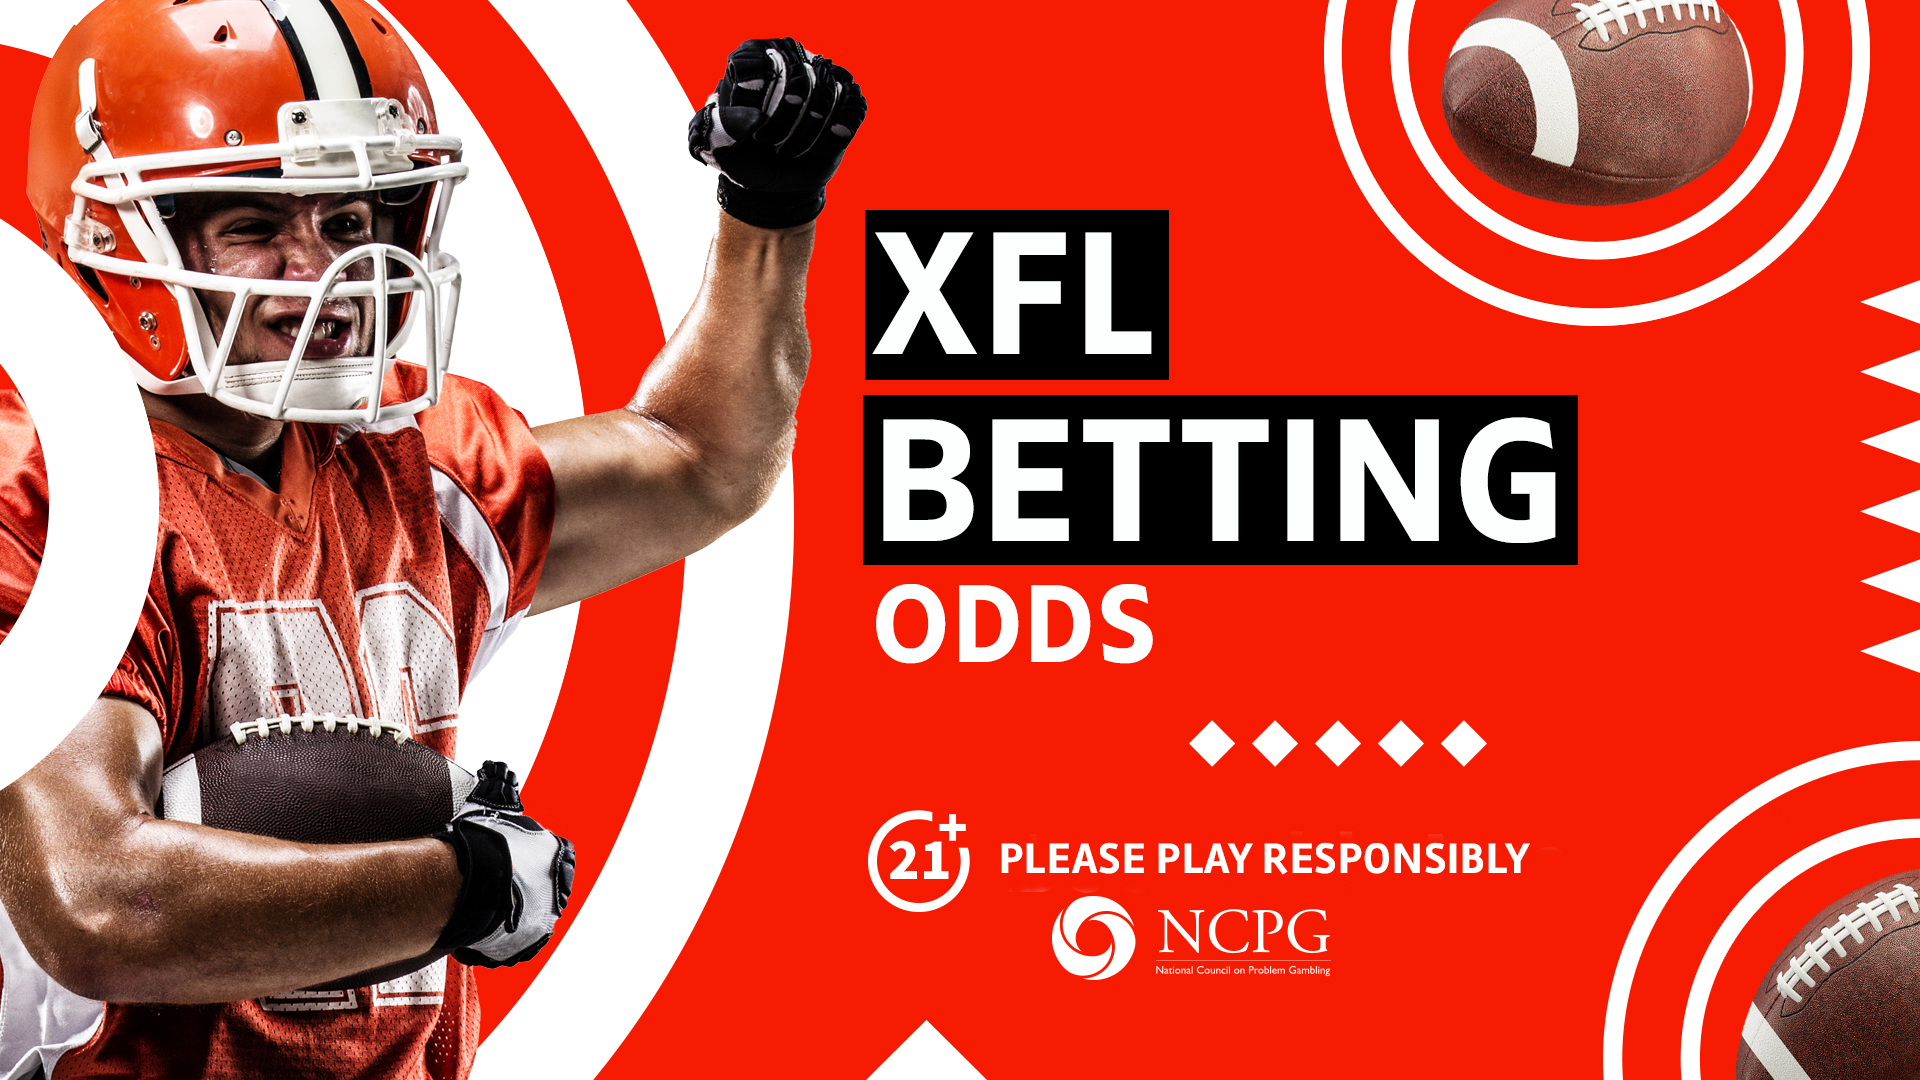 Photo: xfl betting odds